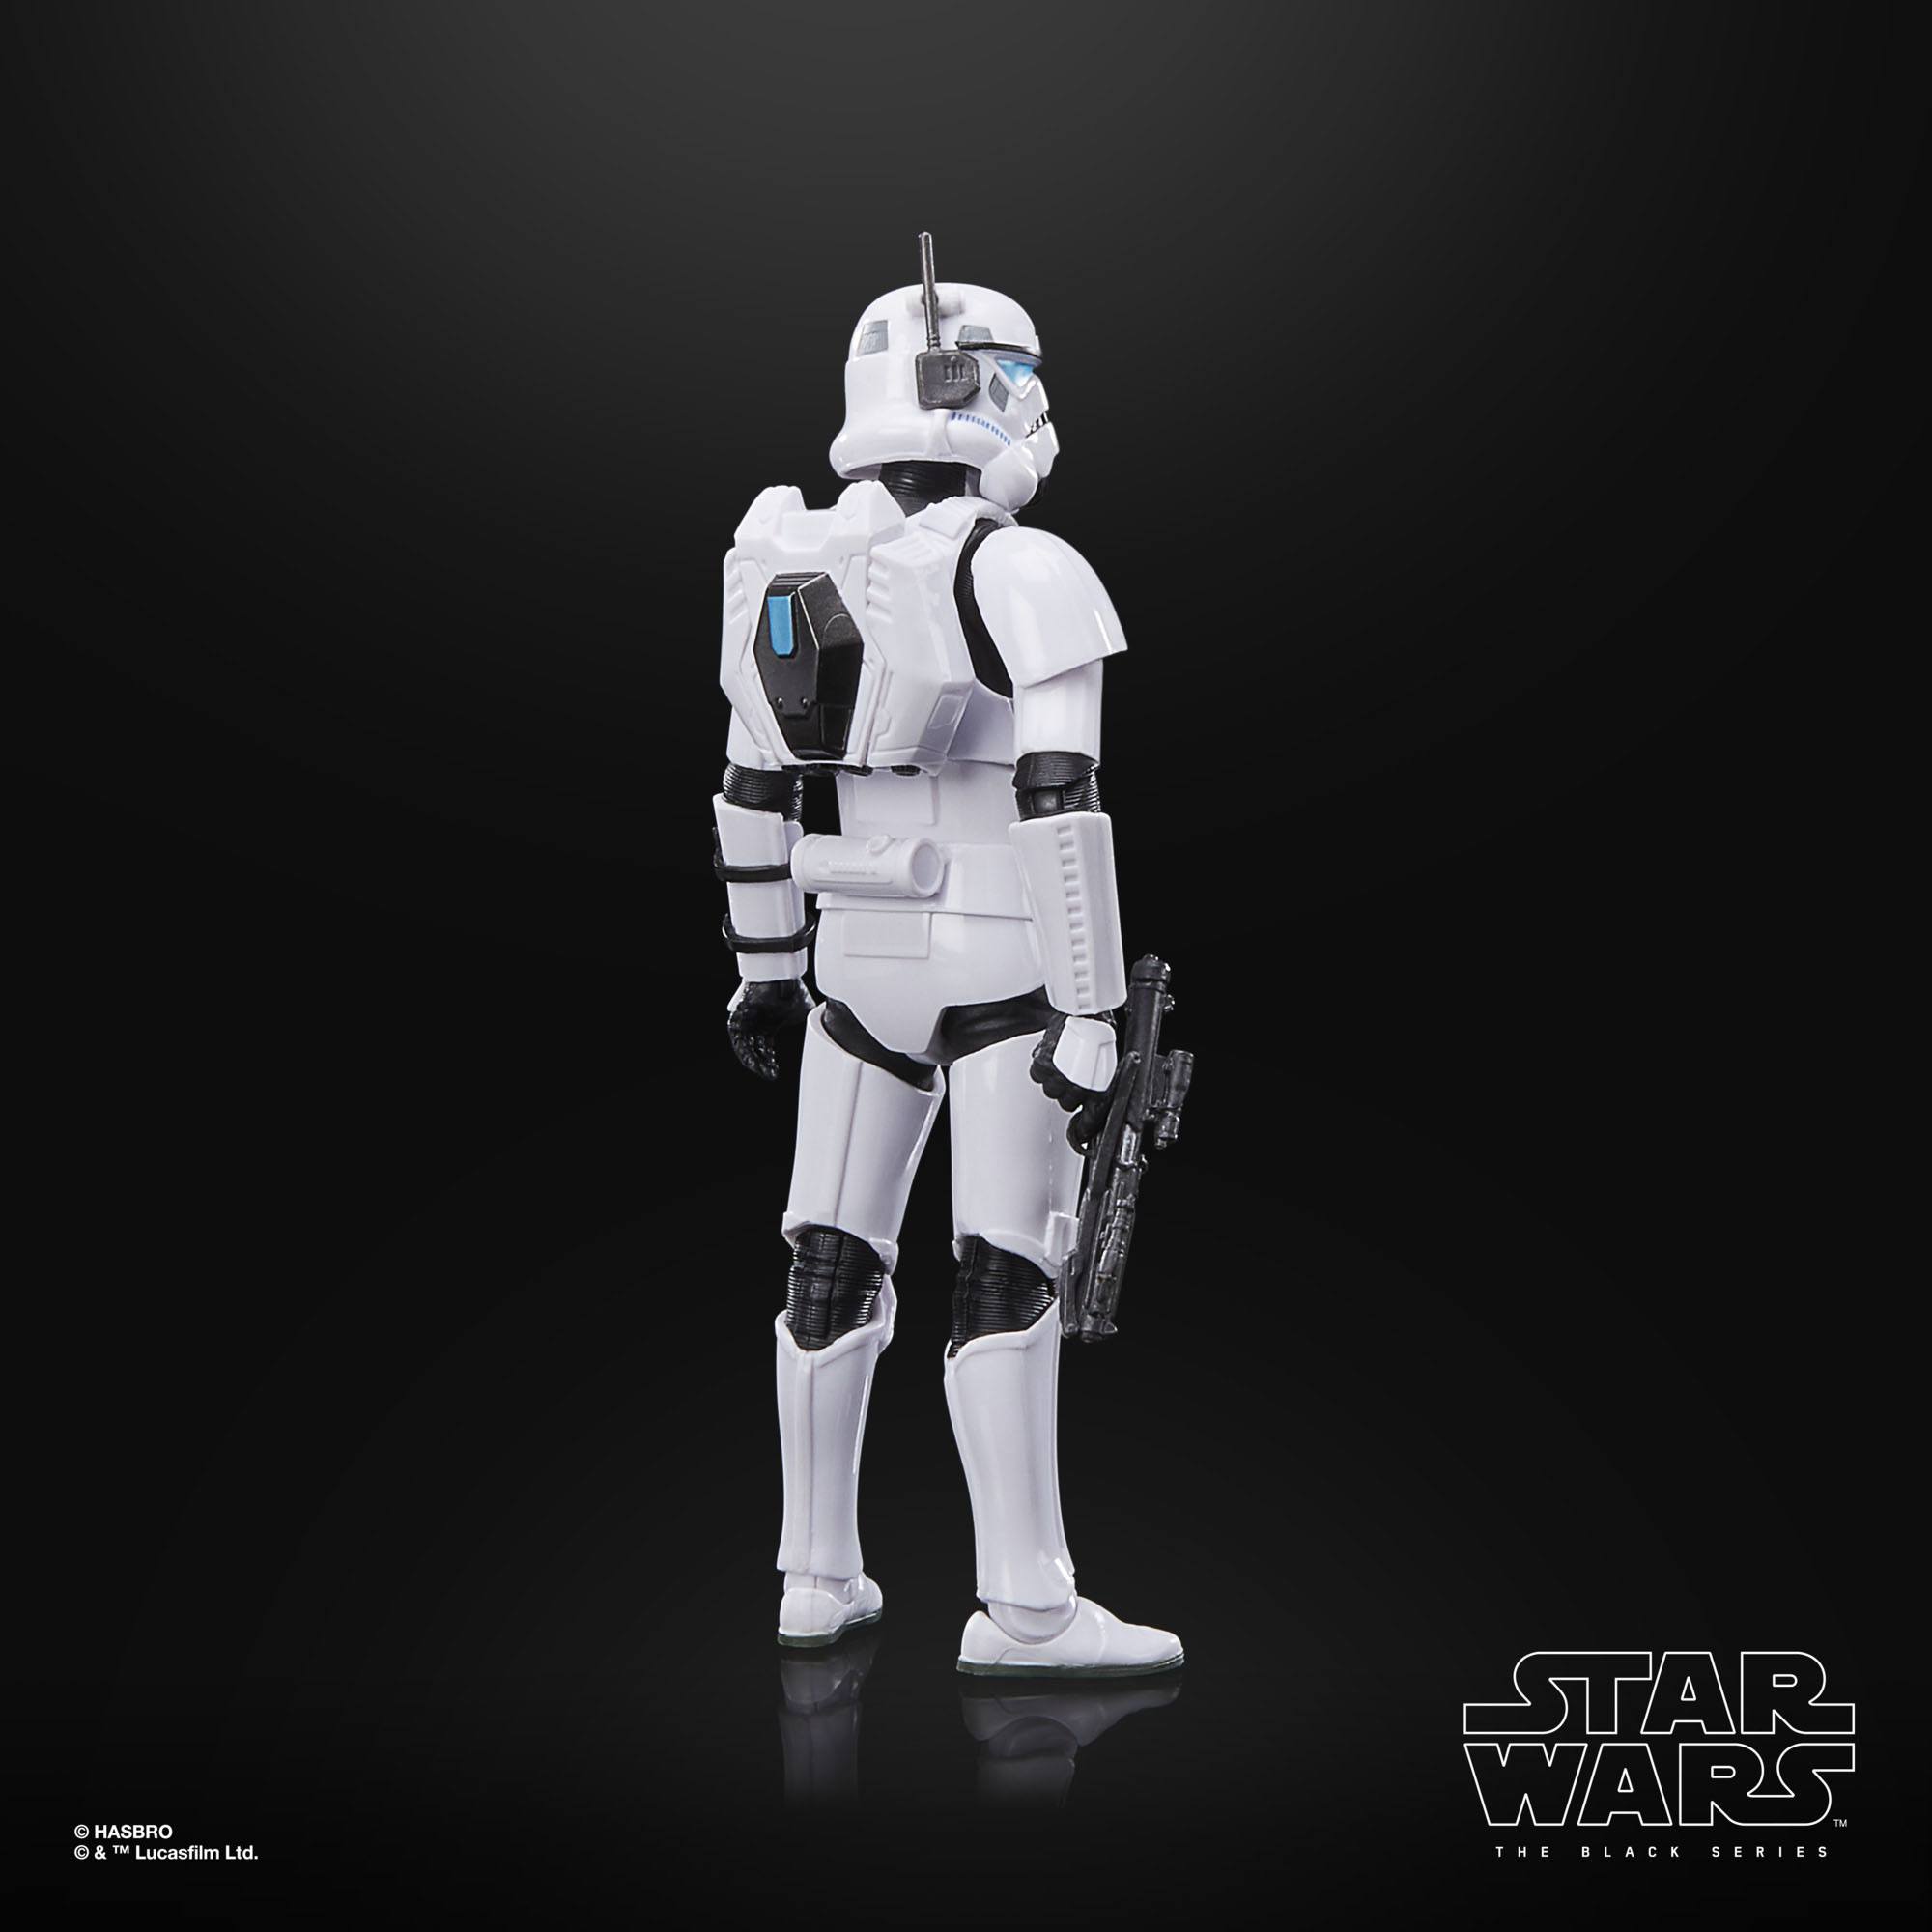 Star Wars Black Series Actionfigur SCAR Trooper Mic 15 cm F69995L00 5010996121769